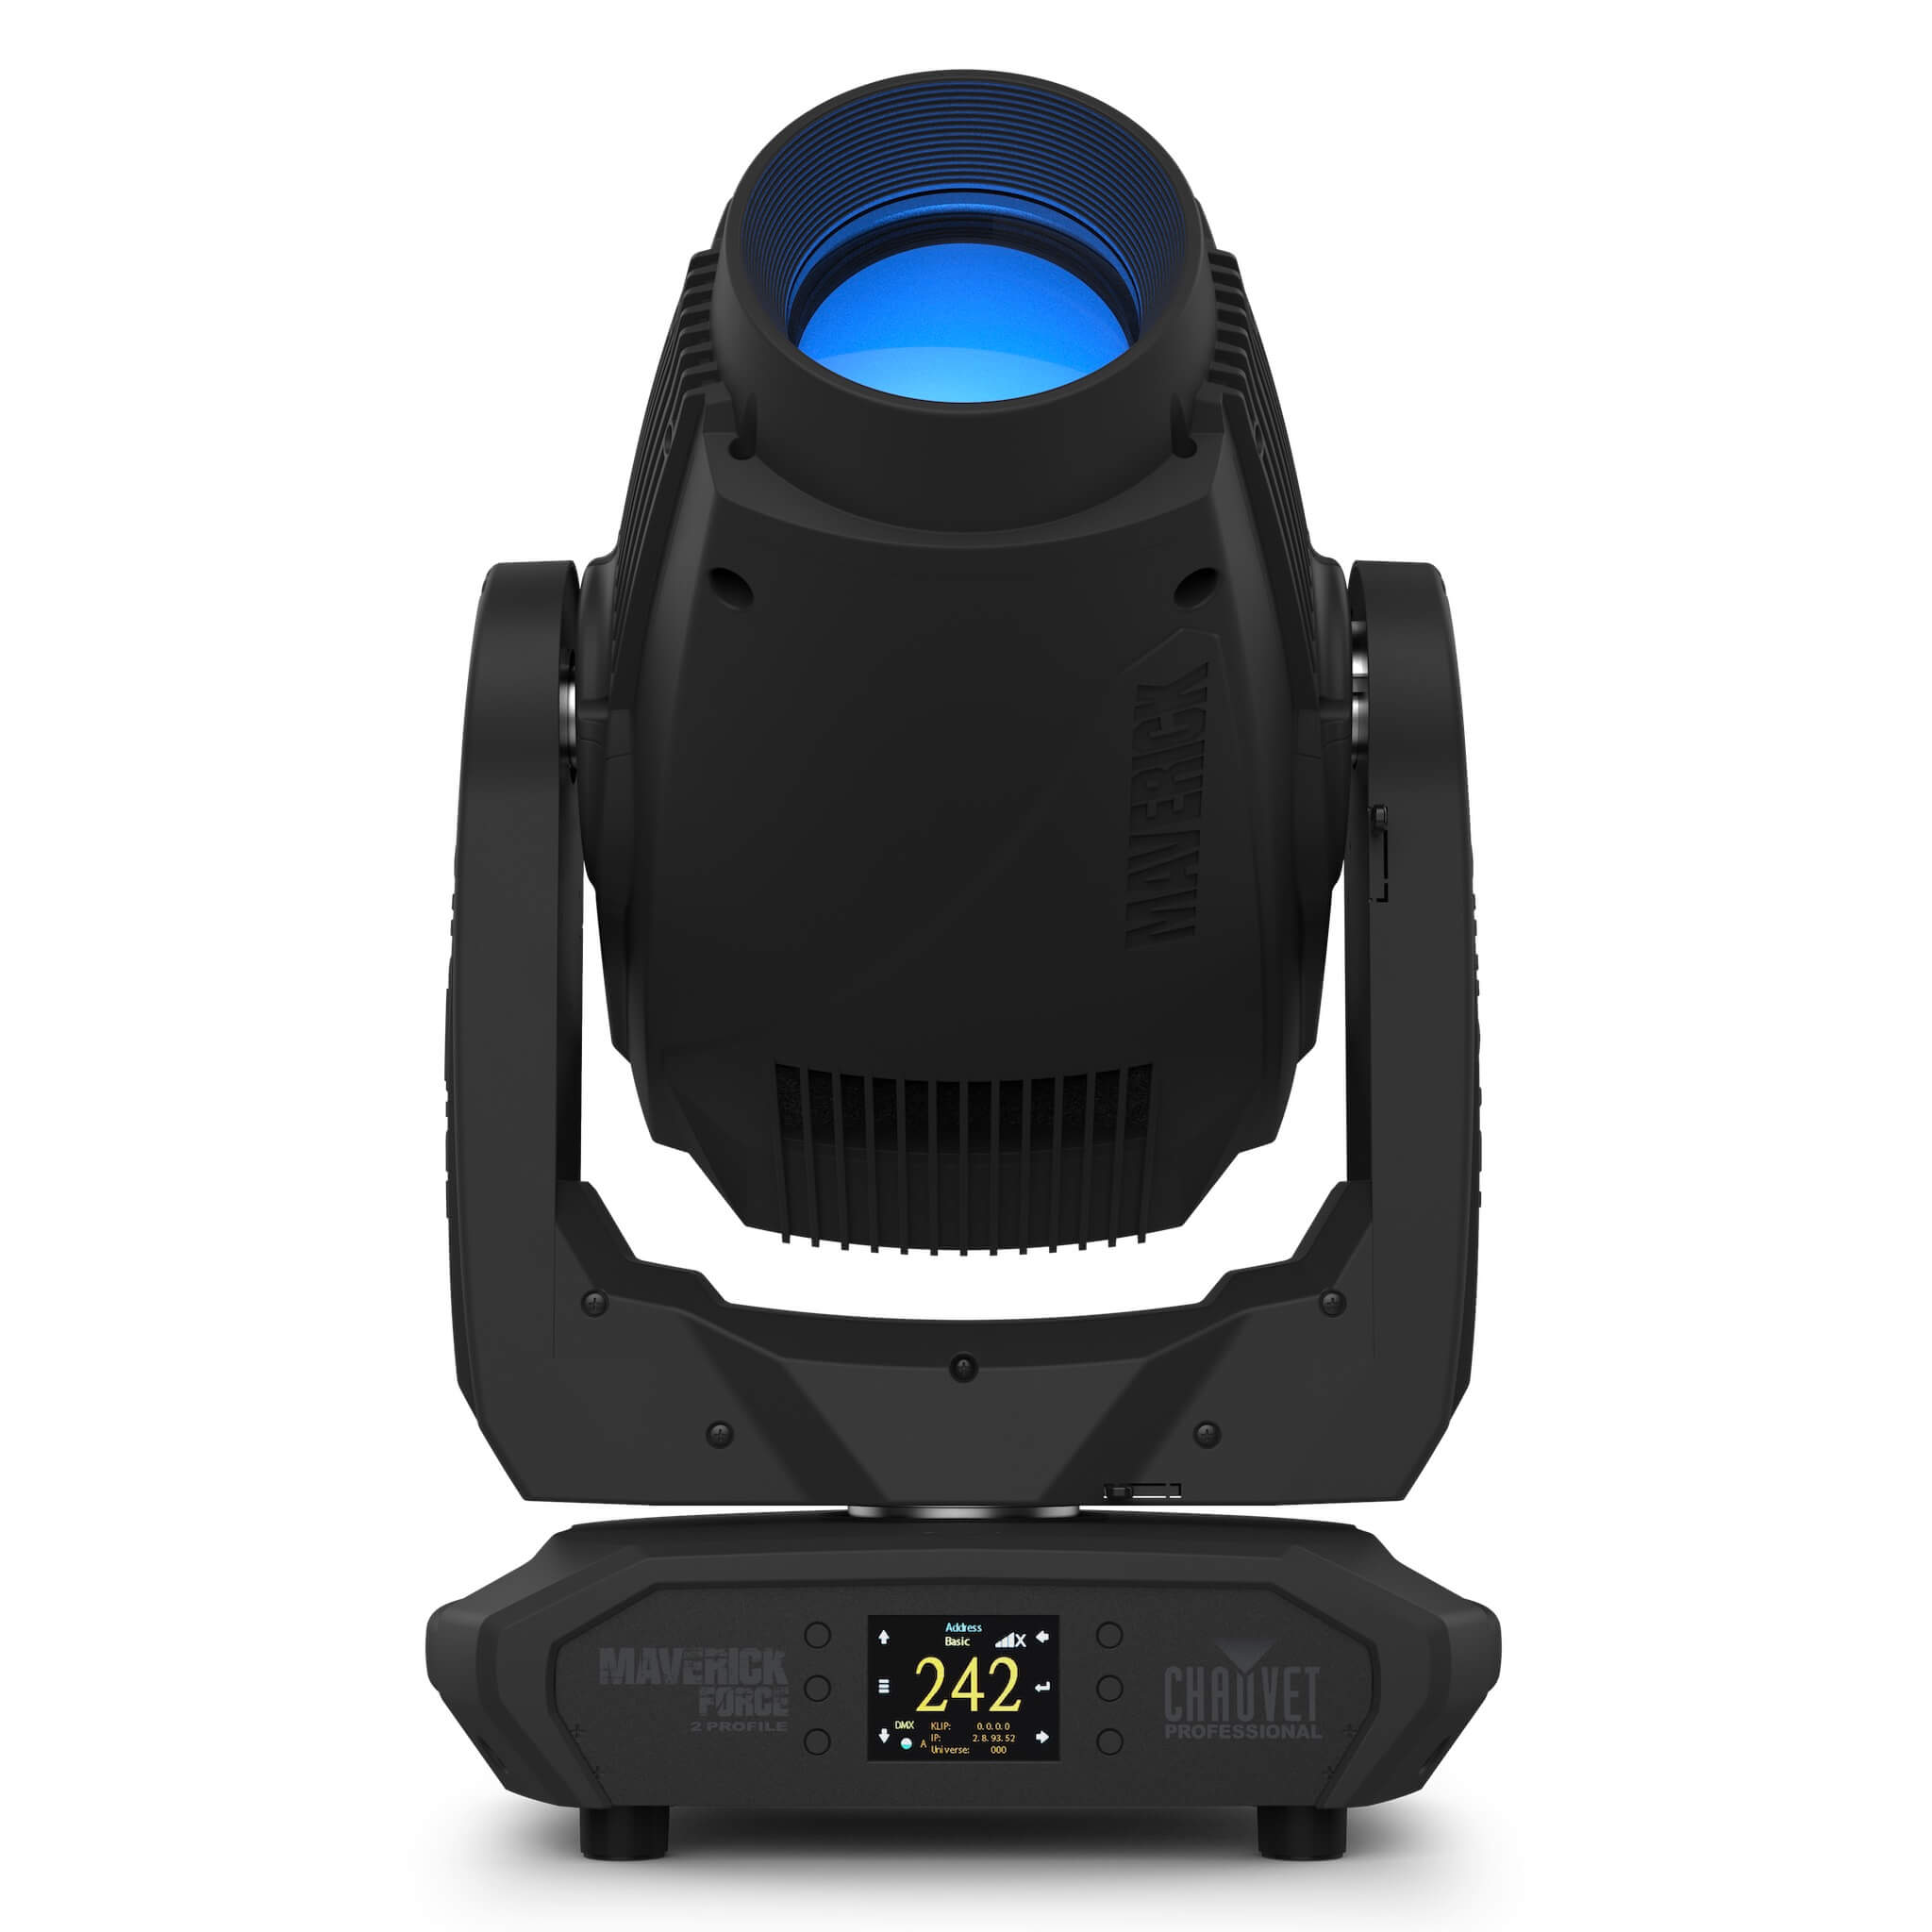 Chauvet Professional Maverick Force 2 Profile - LED Moving Head Light, front